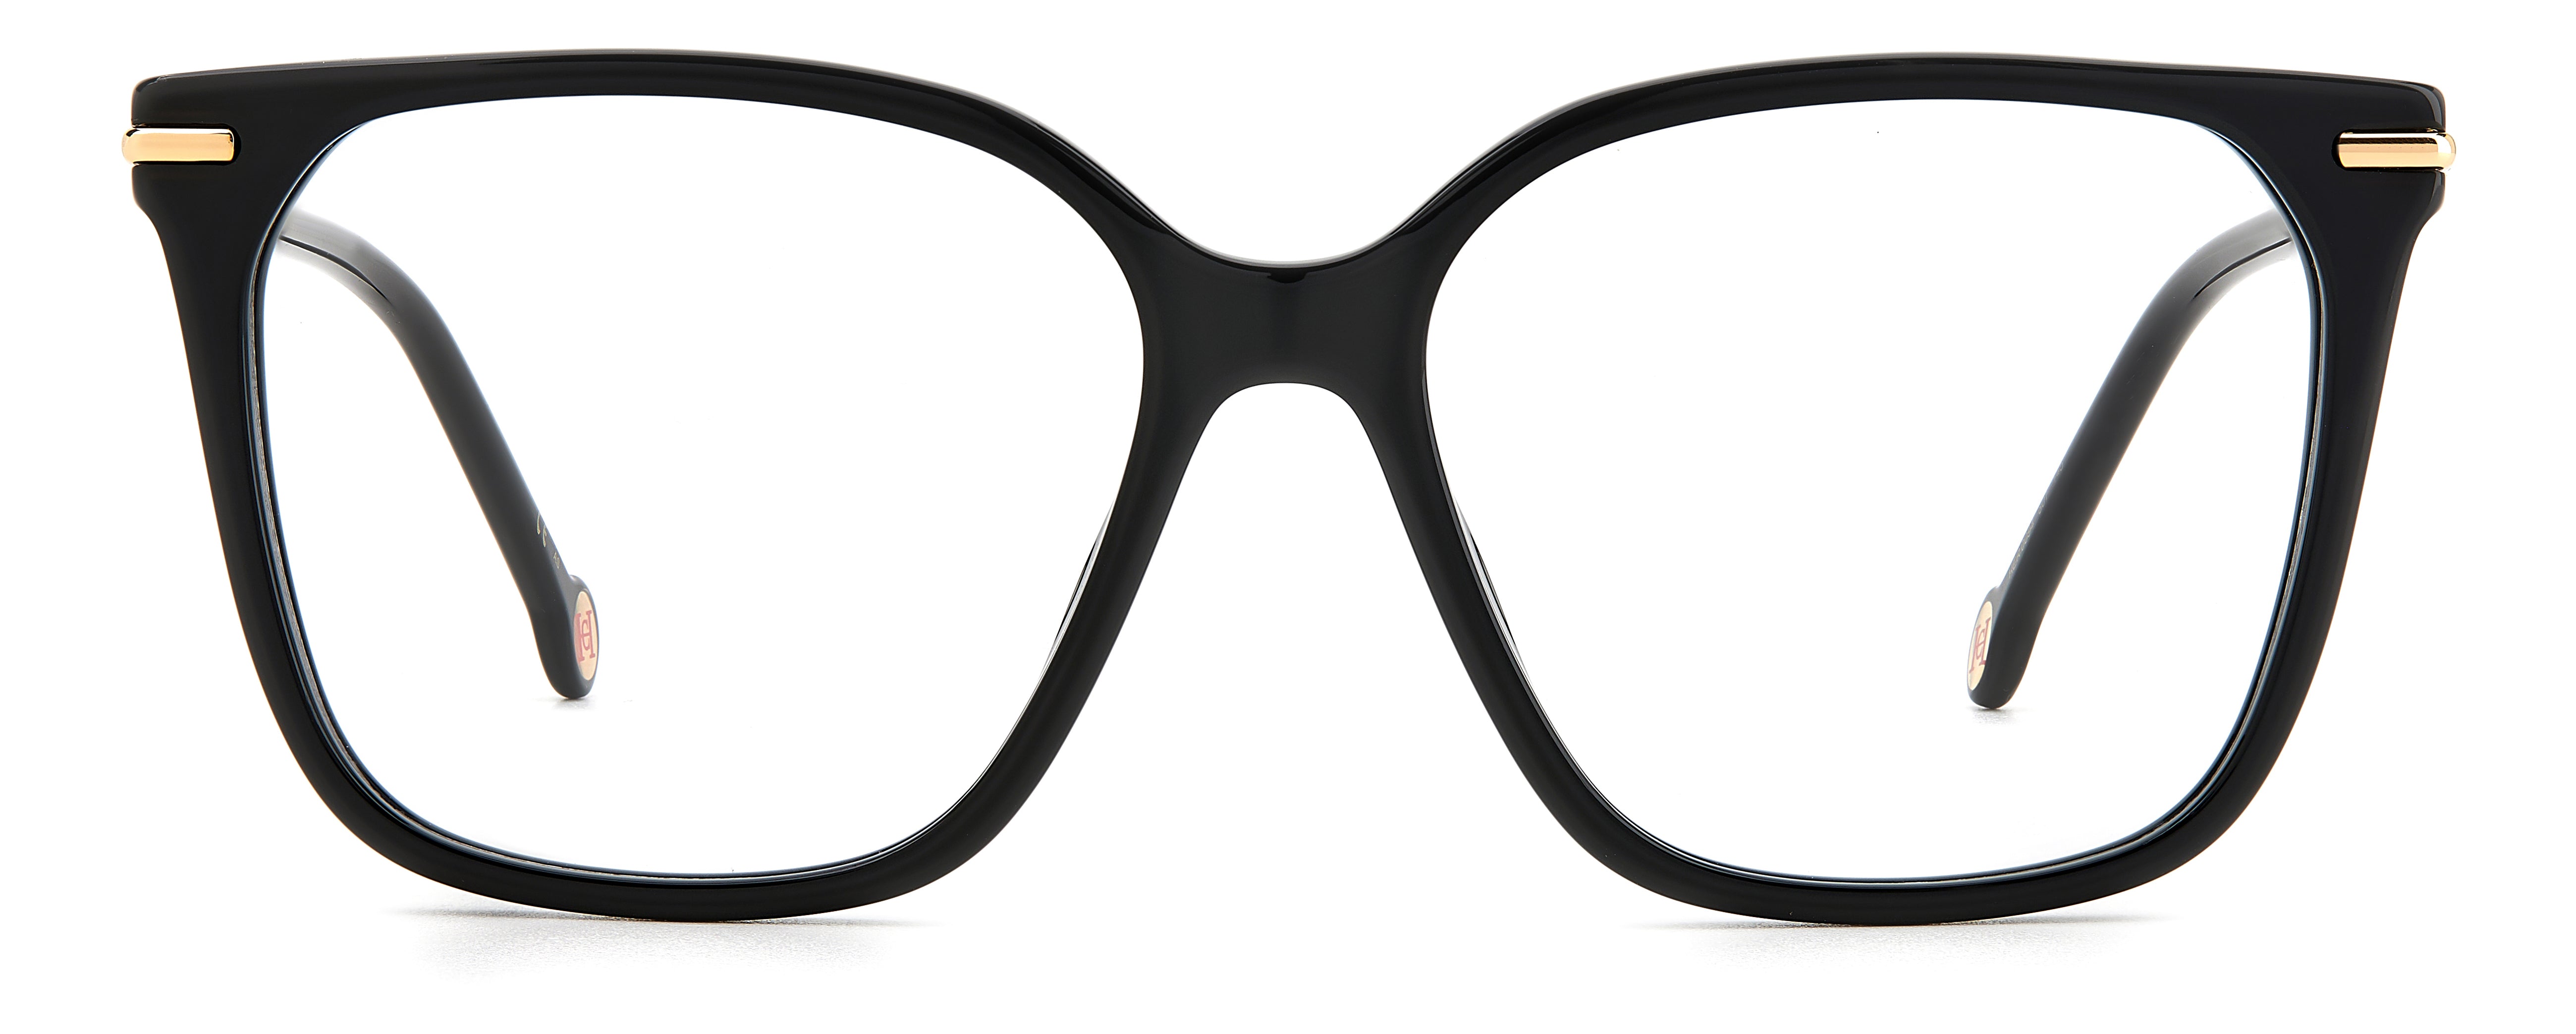 Sunglasses,specsmart, spec smart, glasses, eye glasses glasses frames, where to get glasses in lagos, eye treatment, wellness health care group, caeolina herrera HER 0094